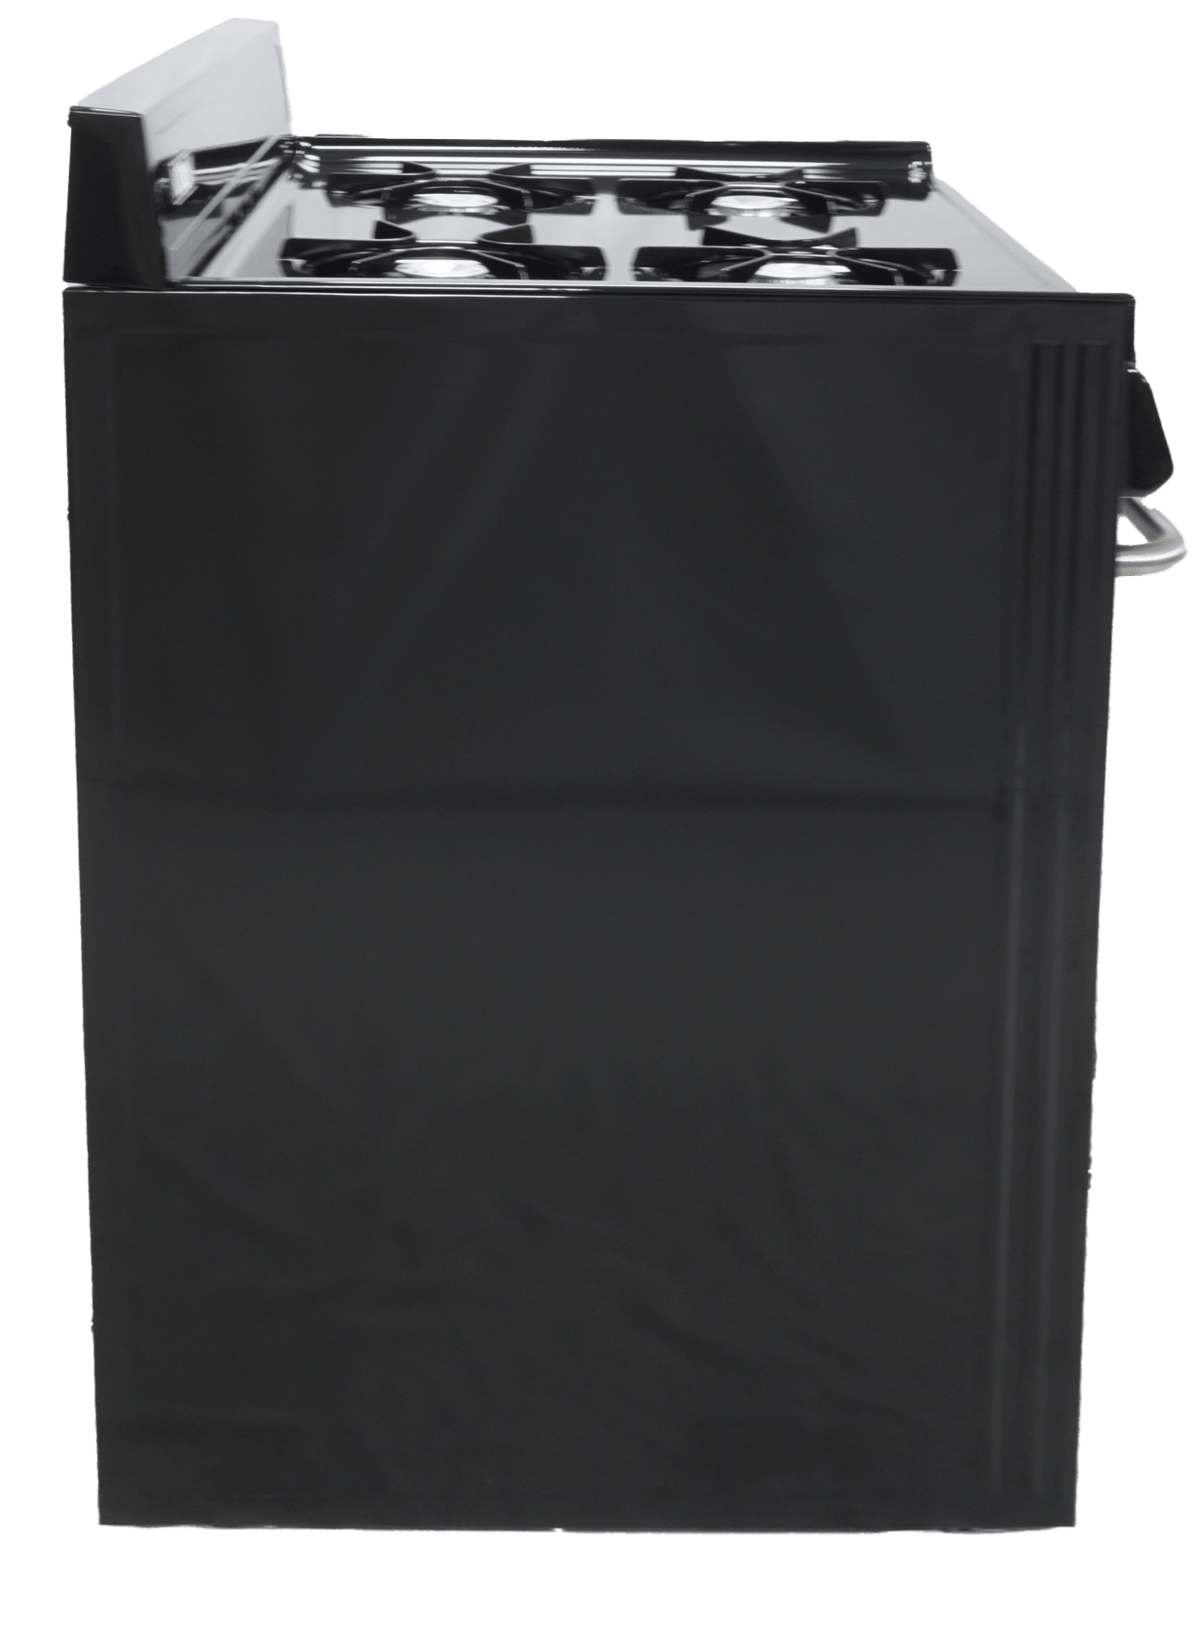 Ben&#39;s Discount Supply Propane Range /Stove Kodiak 30&quot; Propane Range (Black) Battery Ignition with Viewing Window TLM210-CPV